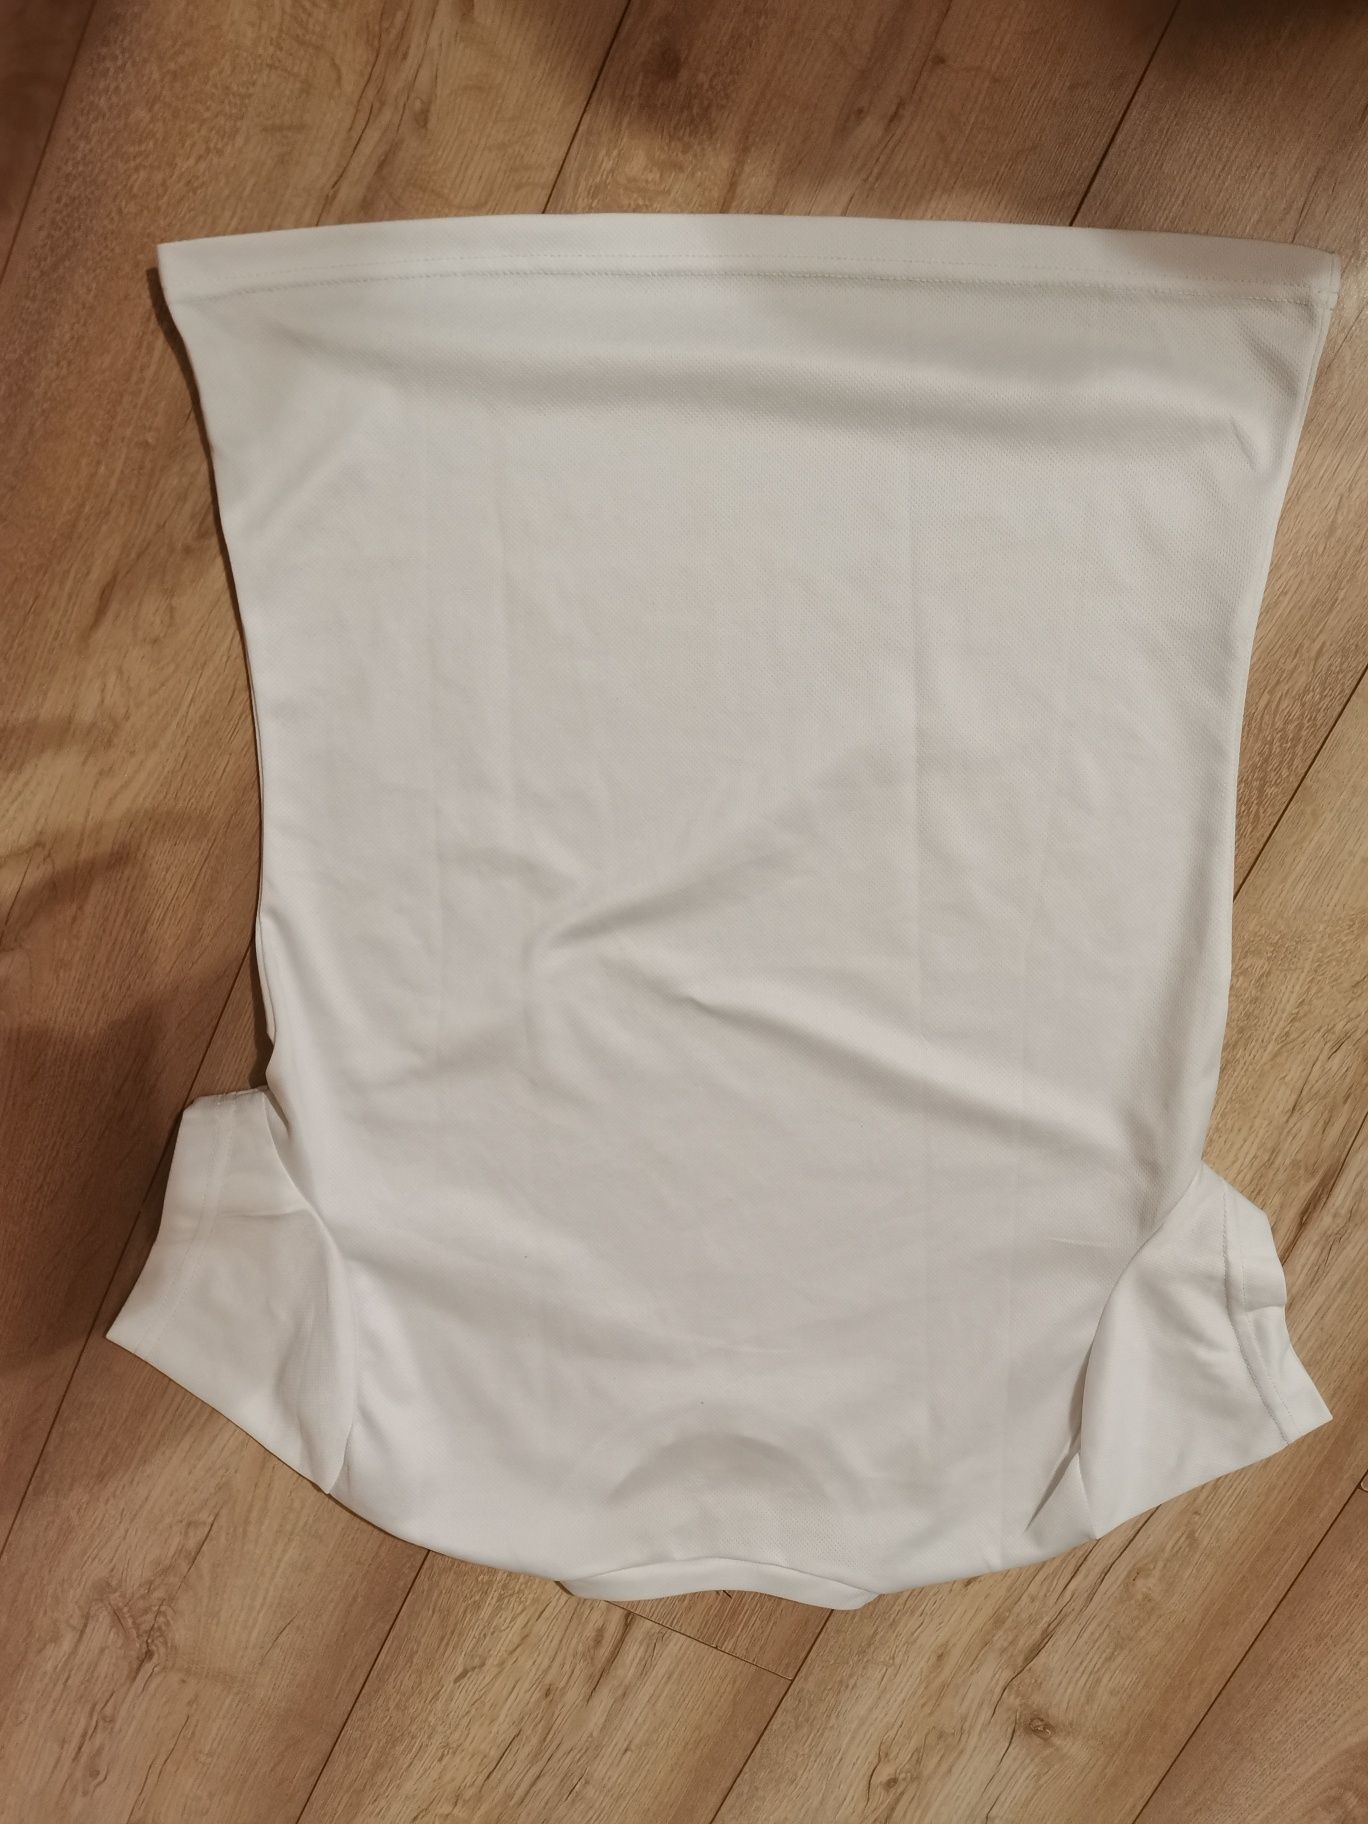 Bluzka koszulka damska biała sportowa Martes Essentials 38 M krótki